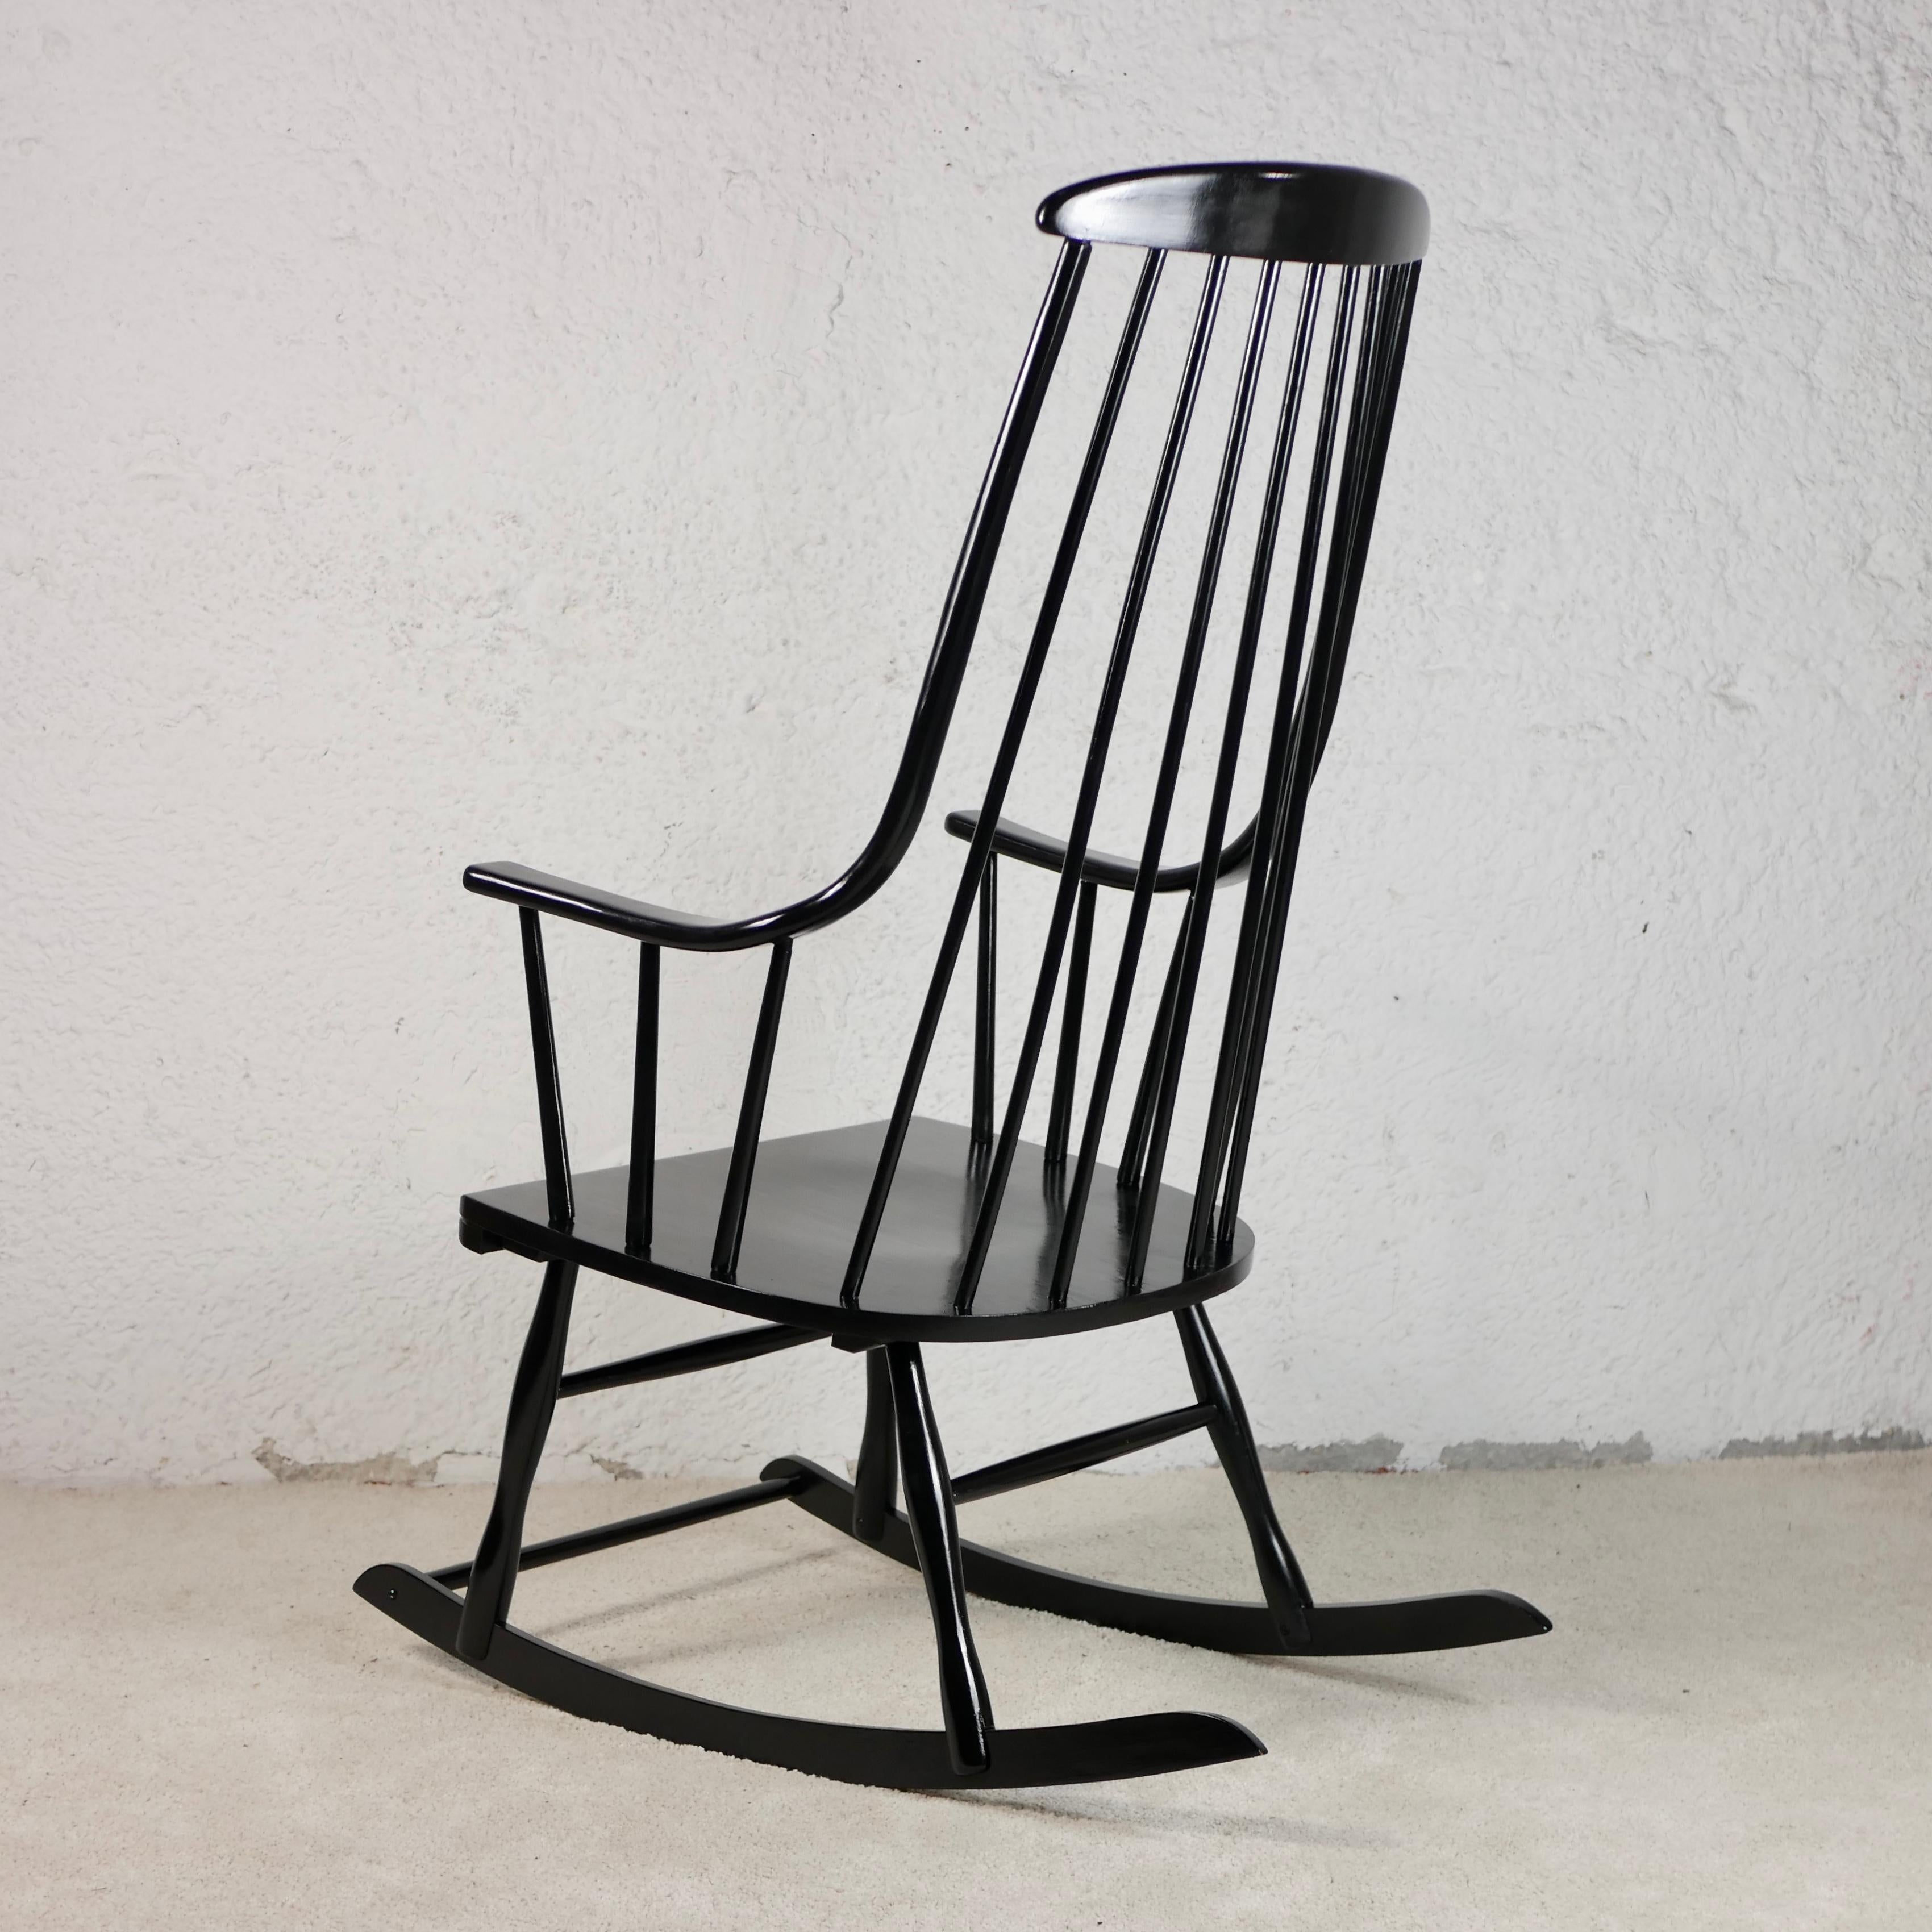 Beech Lena Larsson's Grandessa Rocking-Chair